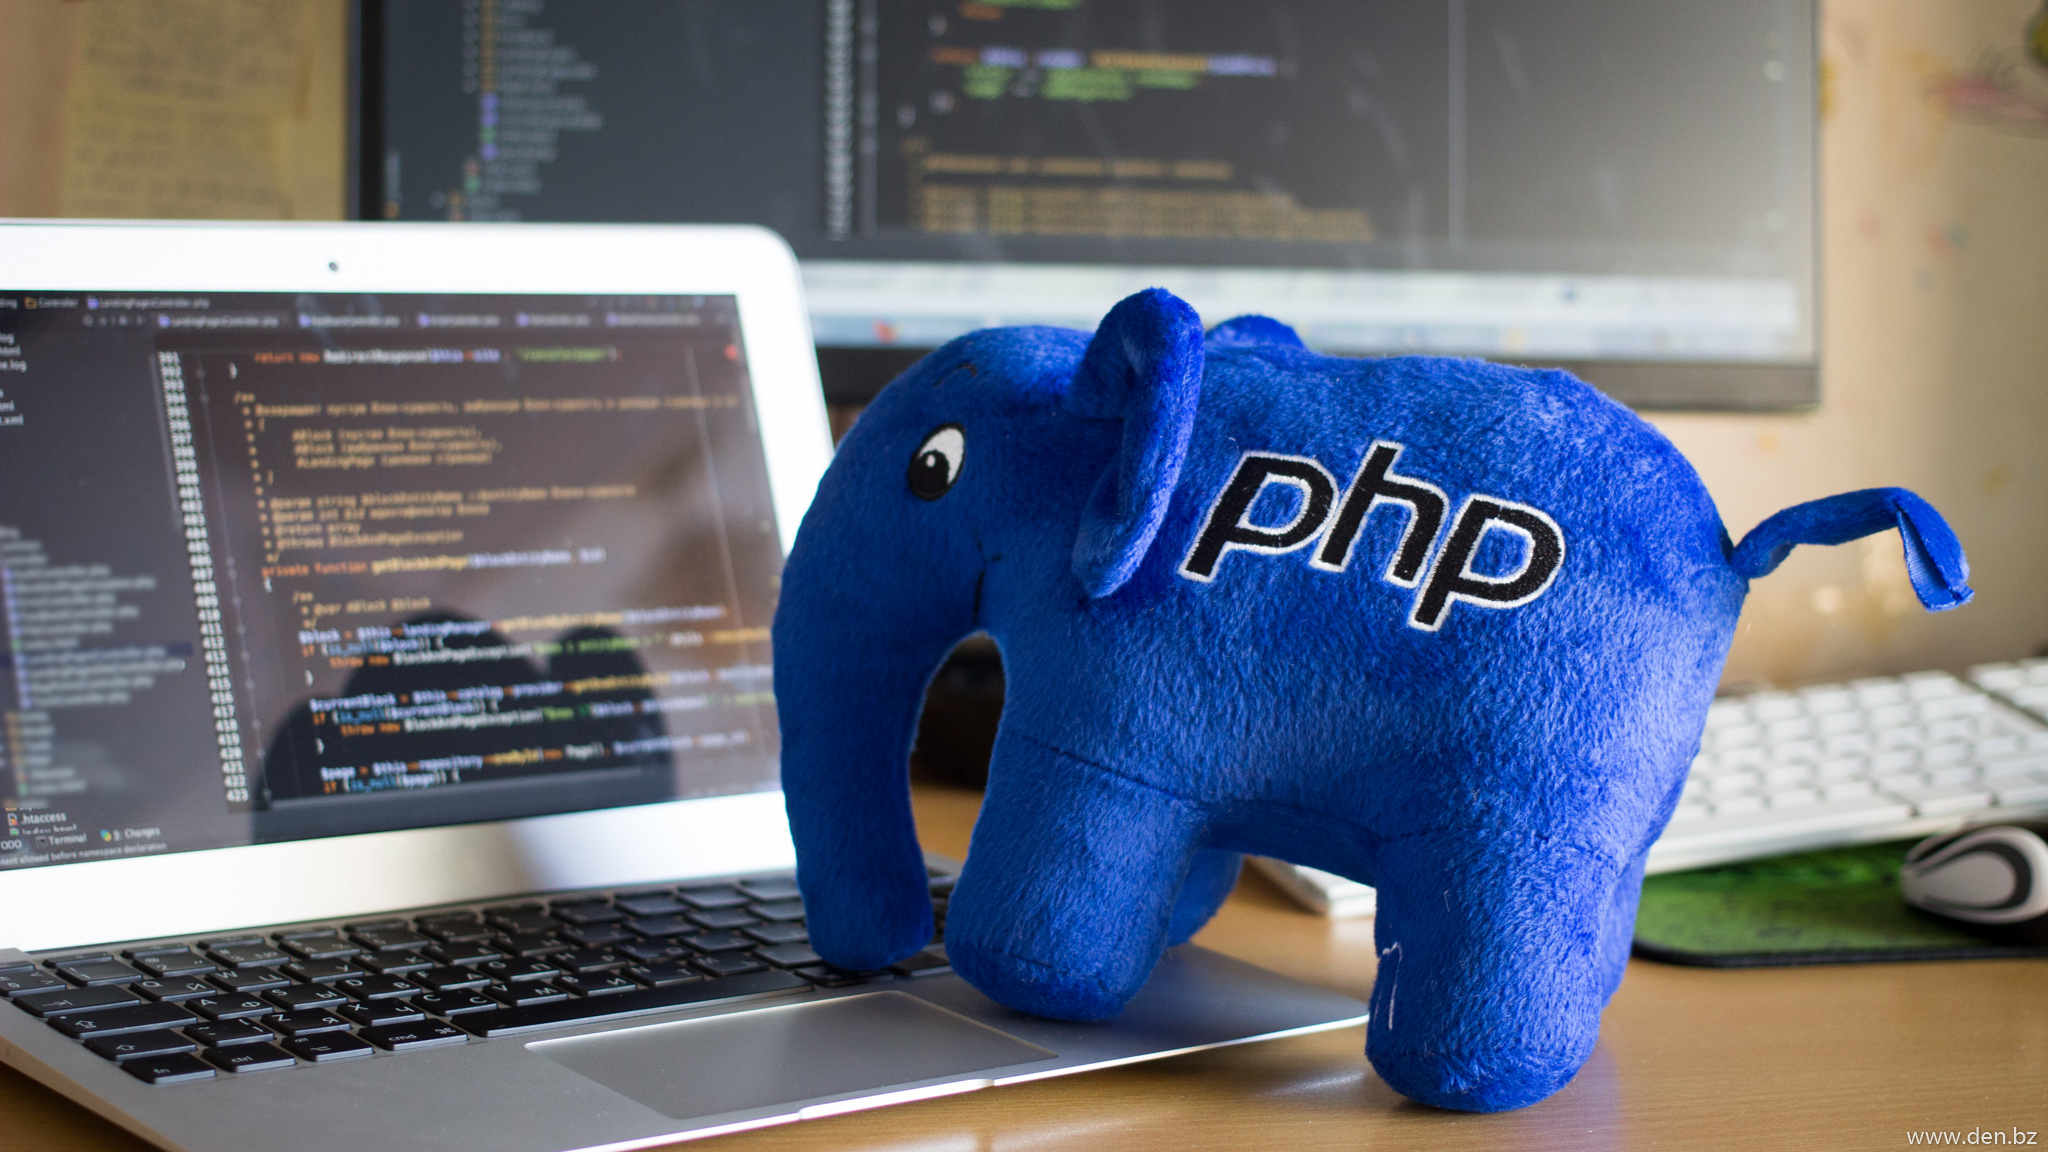 Unset php. Php. Php язык программирования. Php слон. Php программирование.